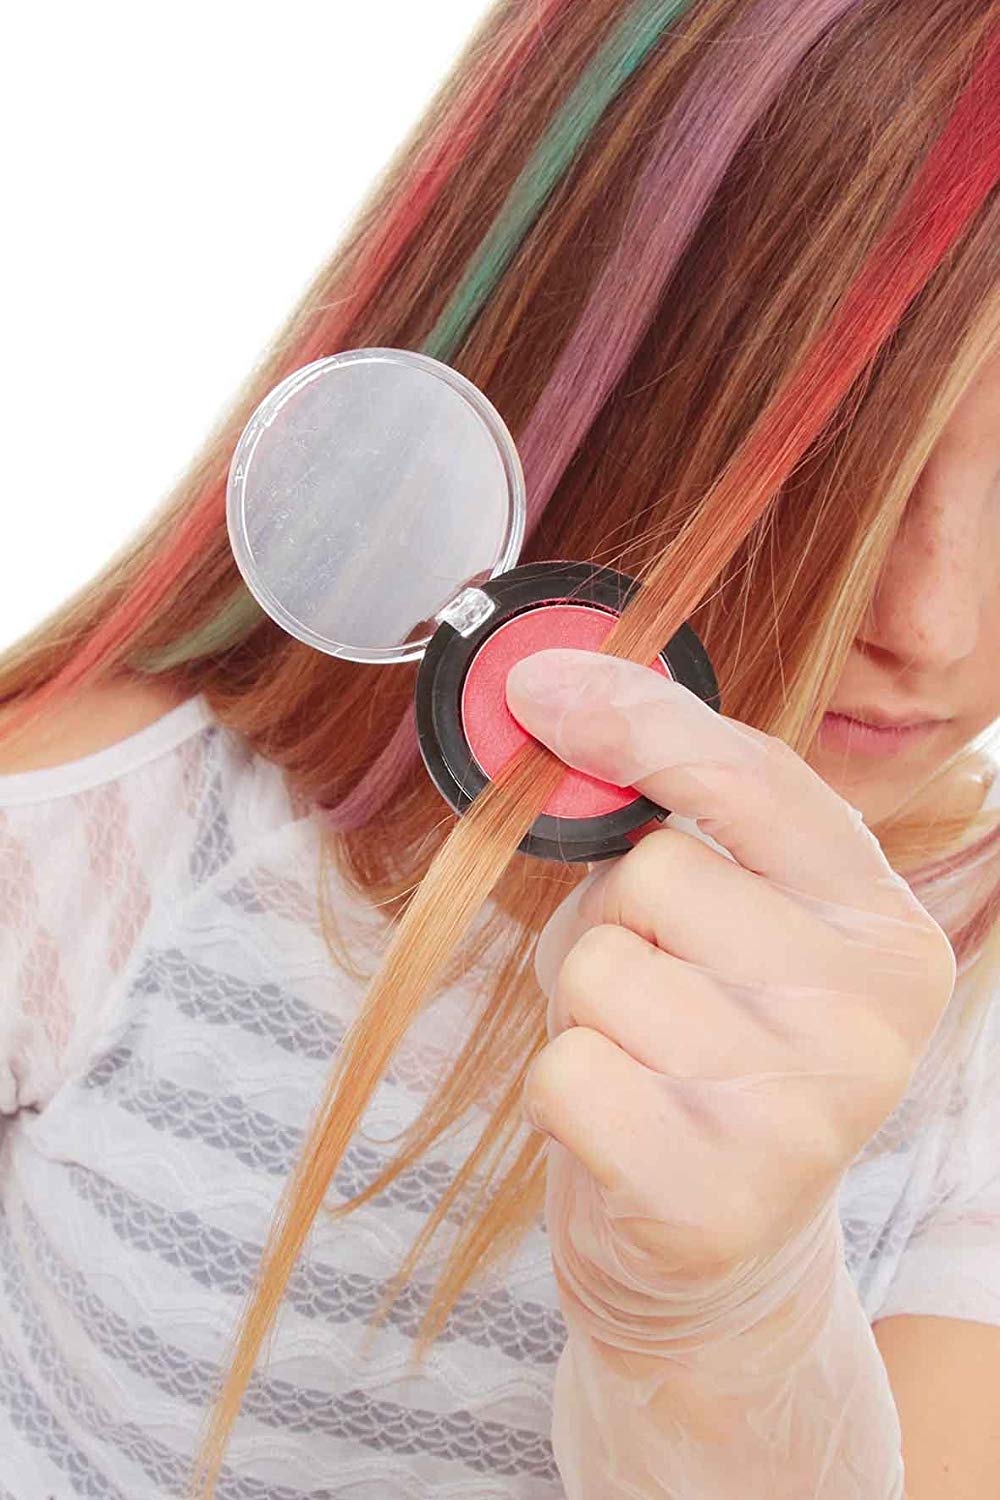 Kronisk Klemme ordningen FabLab FL001 Interplay Hair Lights, Multi – TopToy